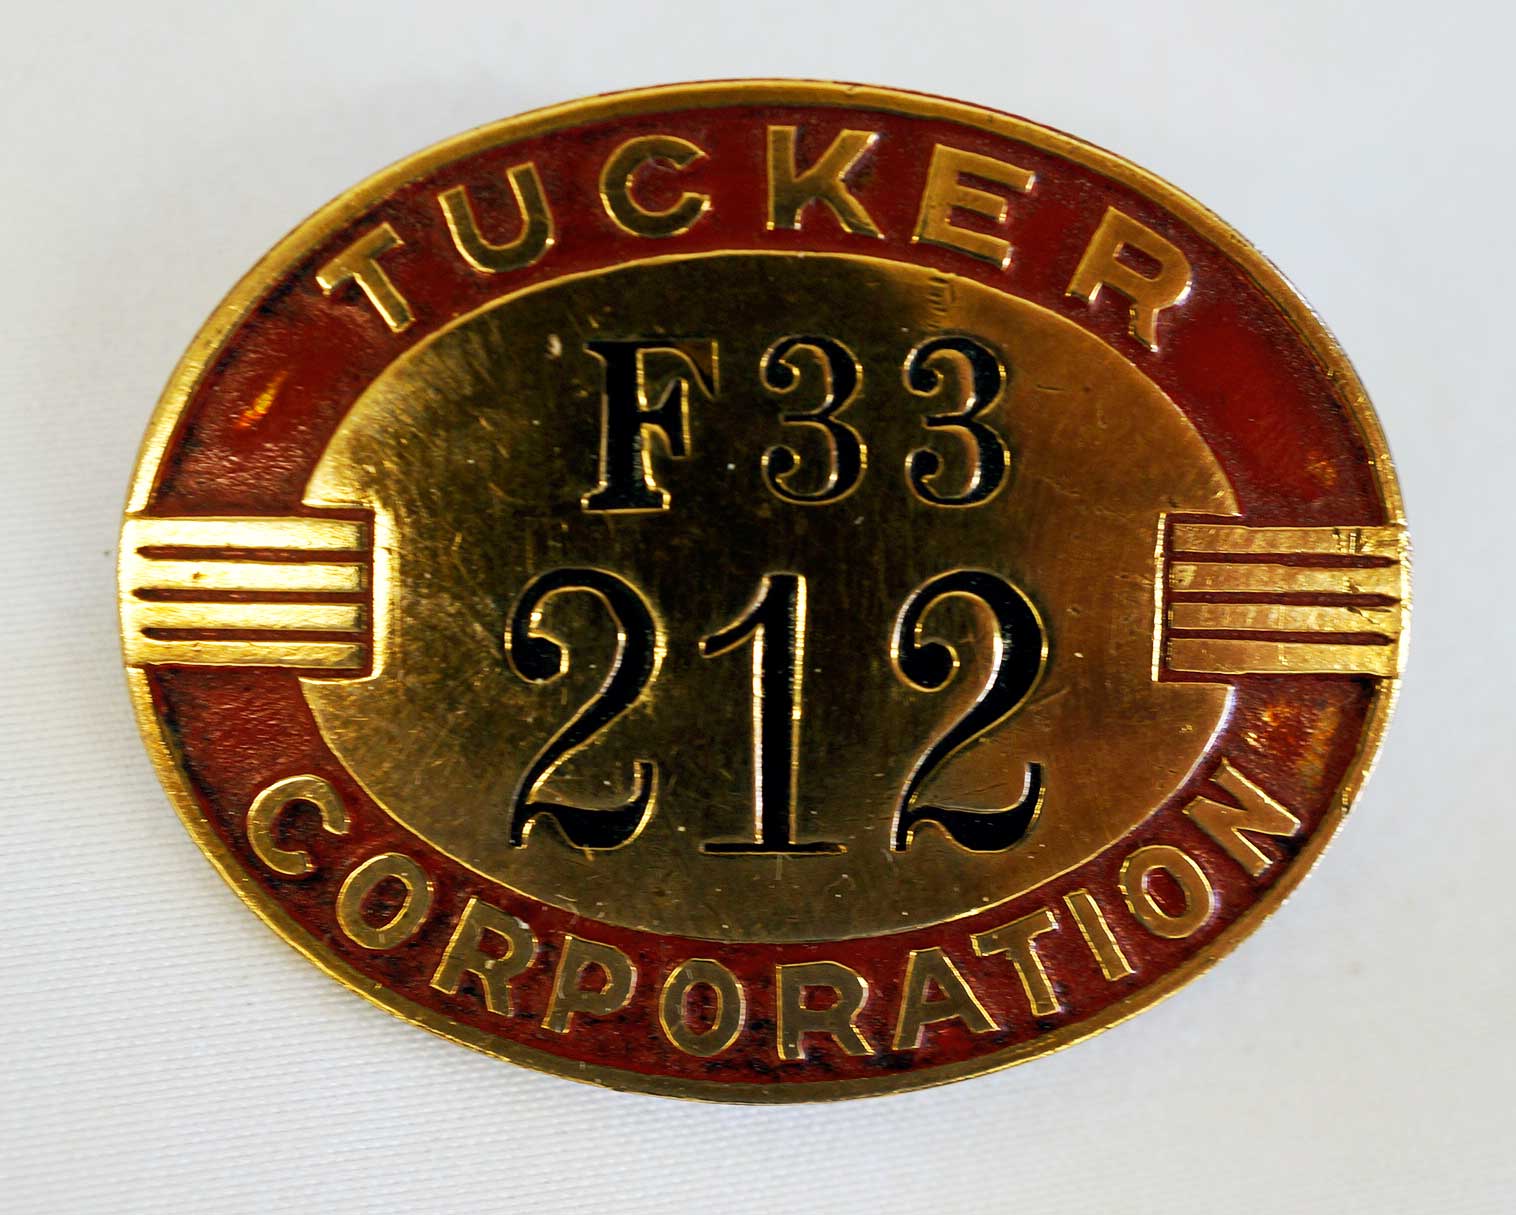 Tucker Car Co Employee Badge